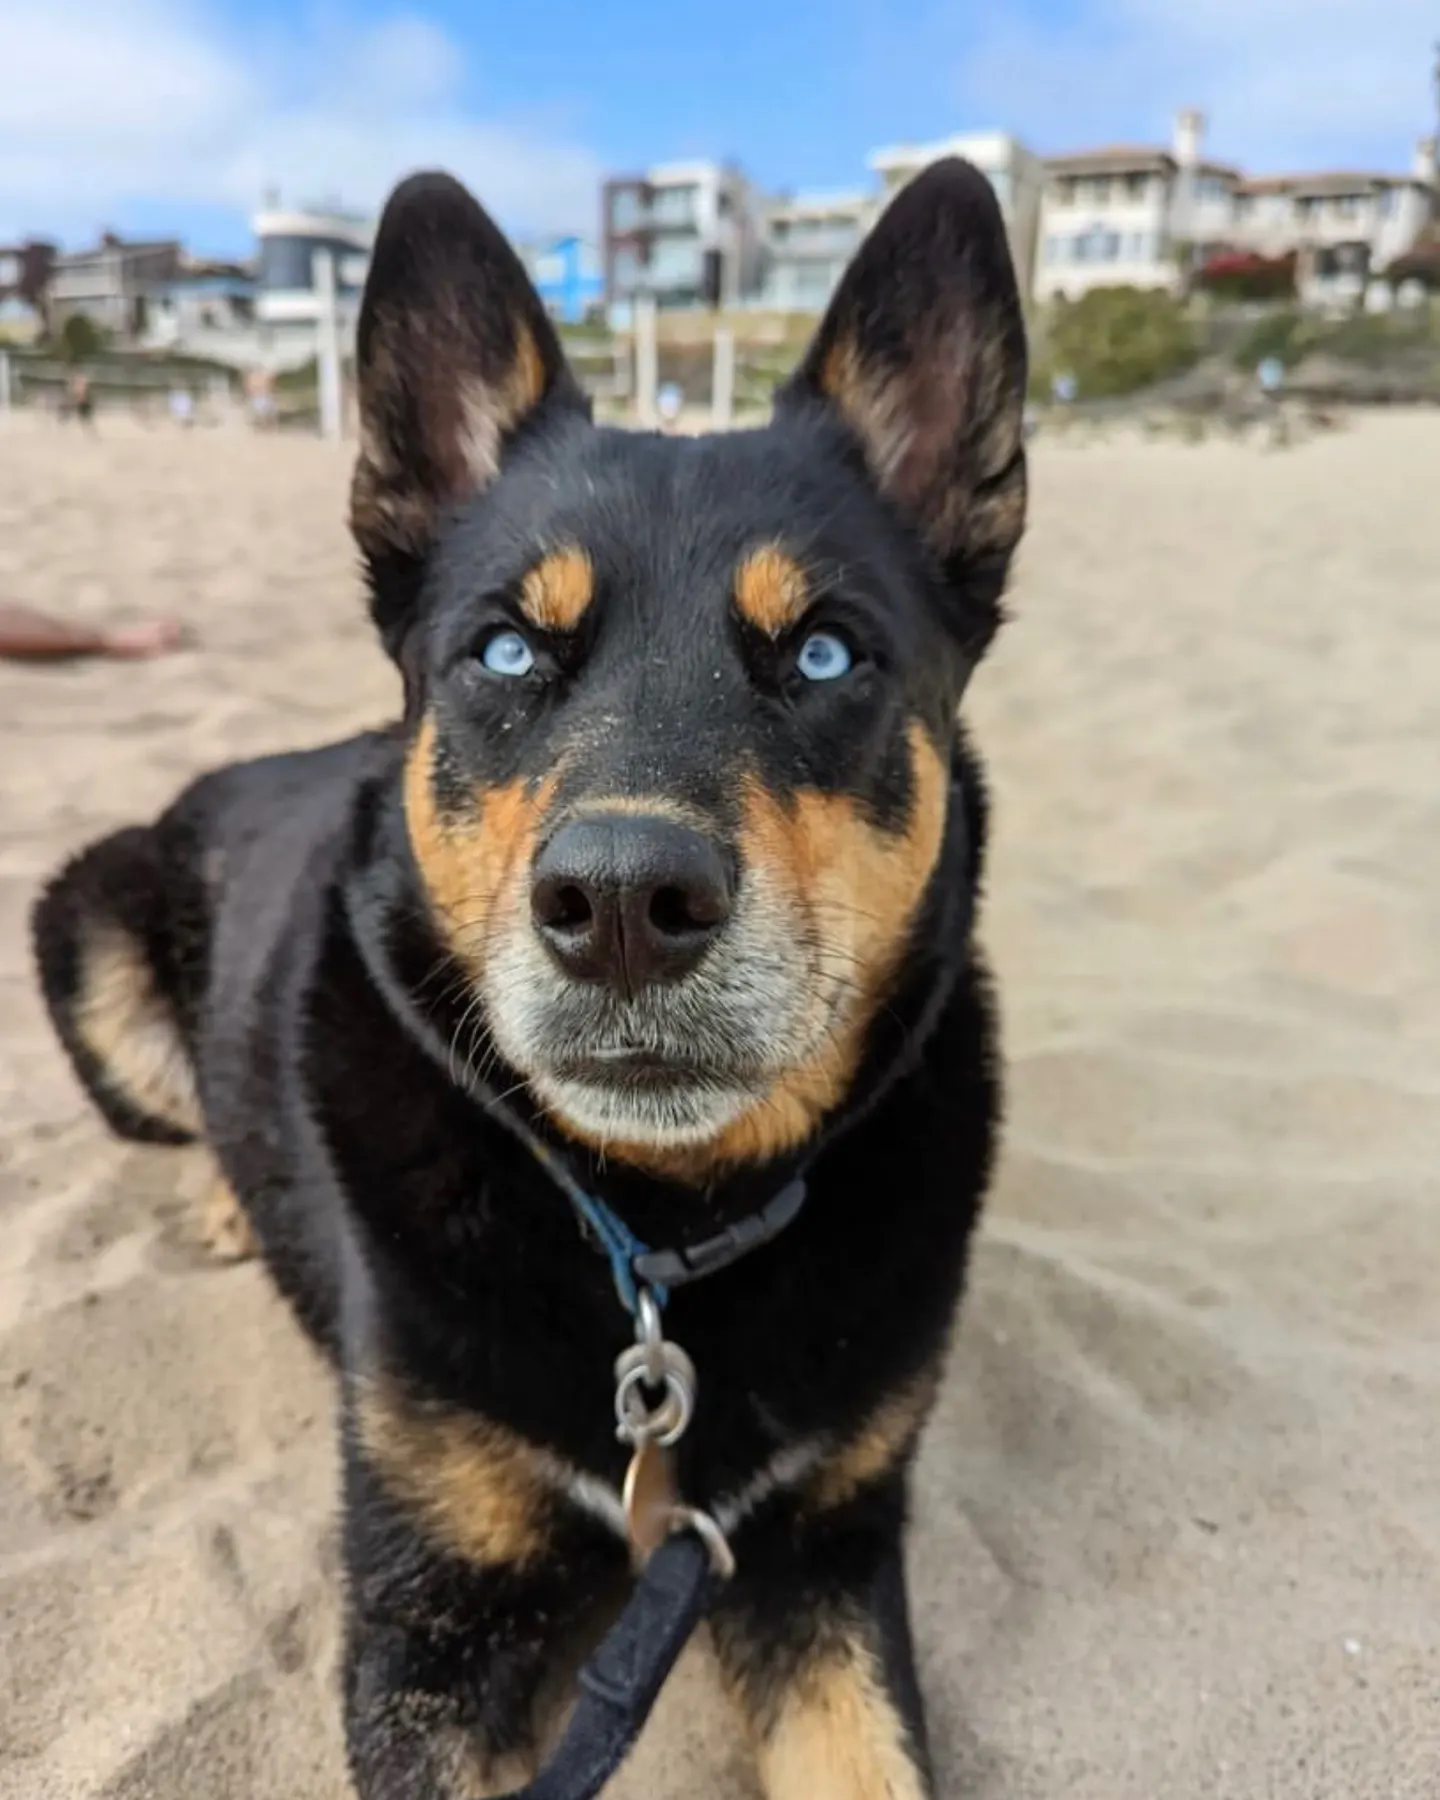 A Rottsky dog enjoying her time at the beach